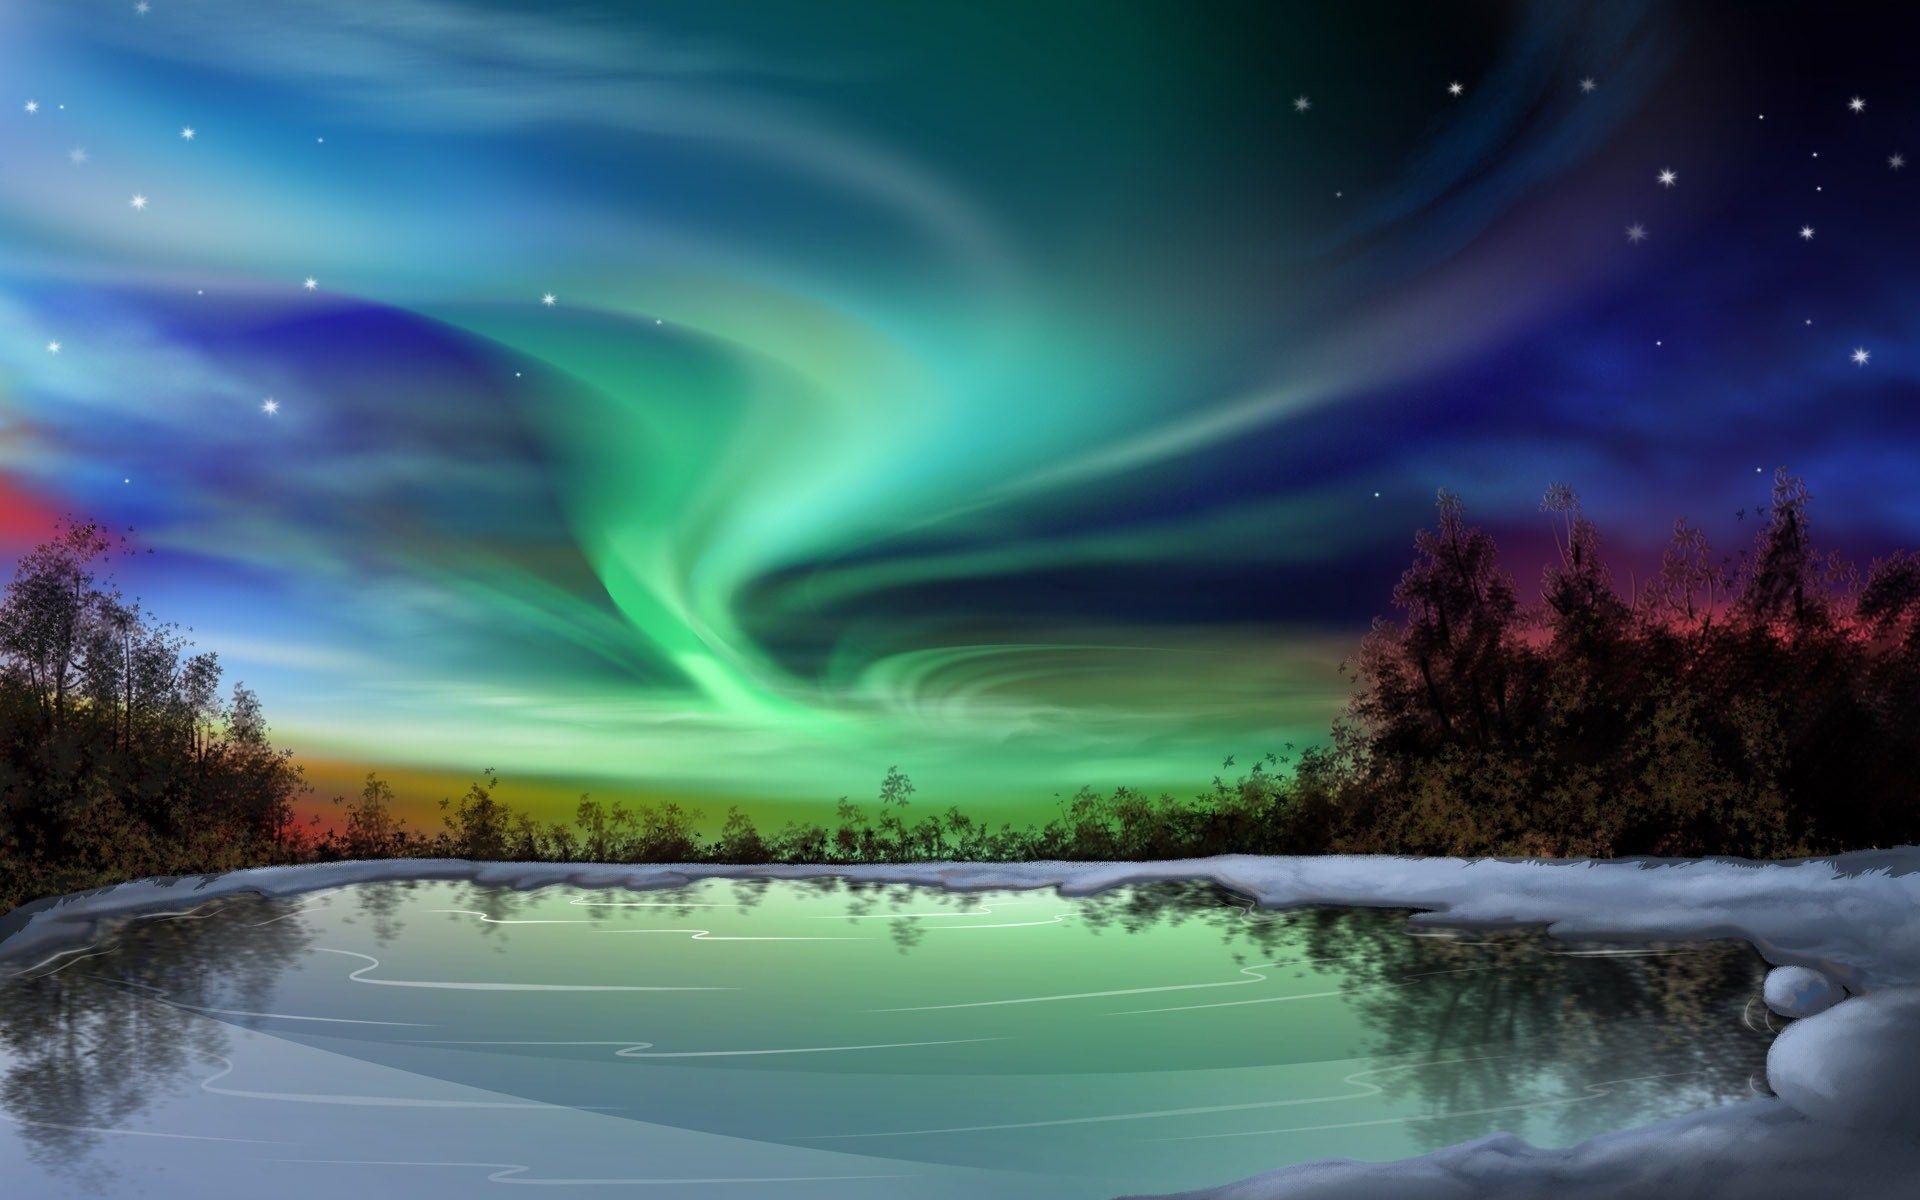 Fondos de pantalla de auroras boreales - FondosMil